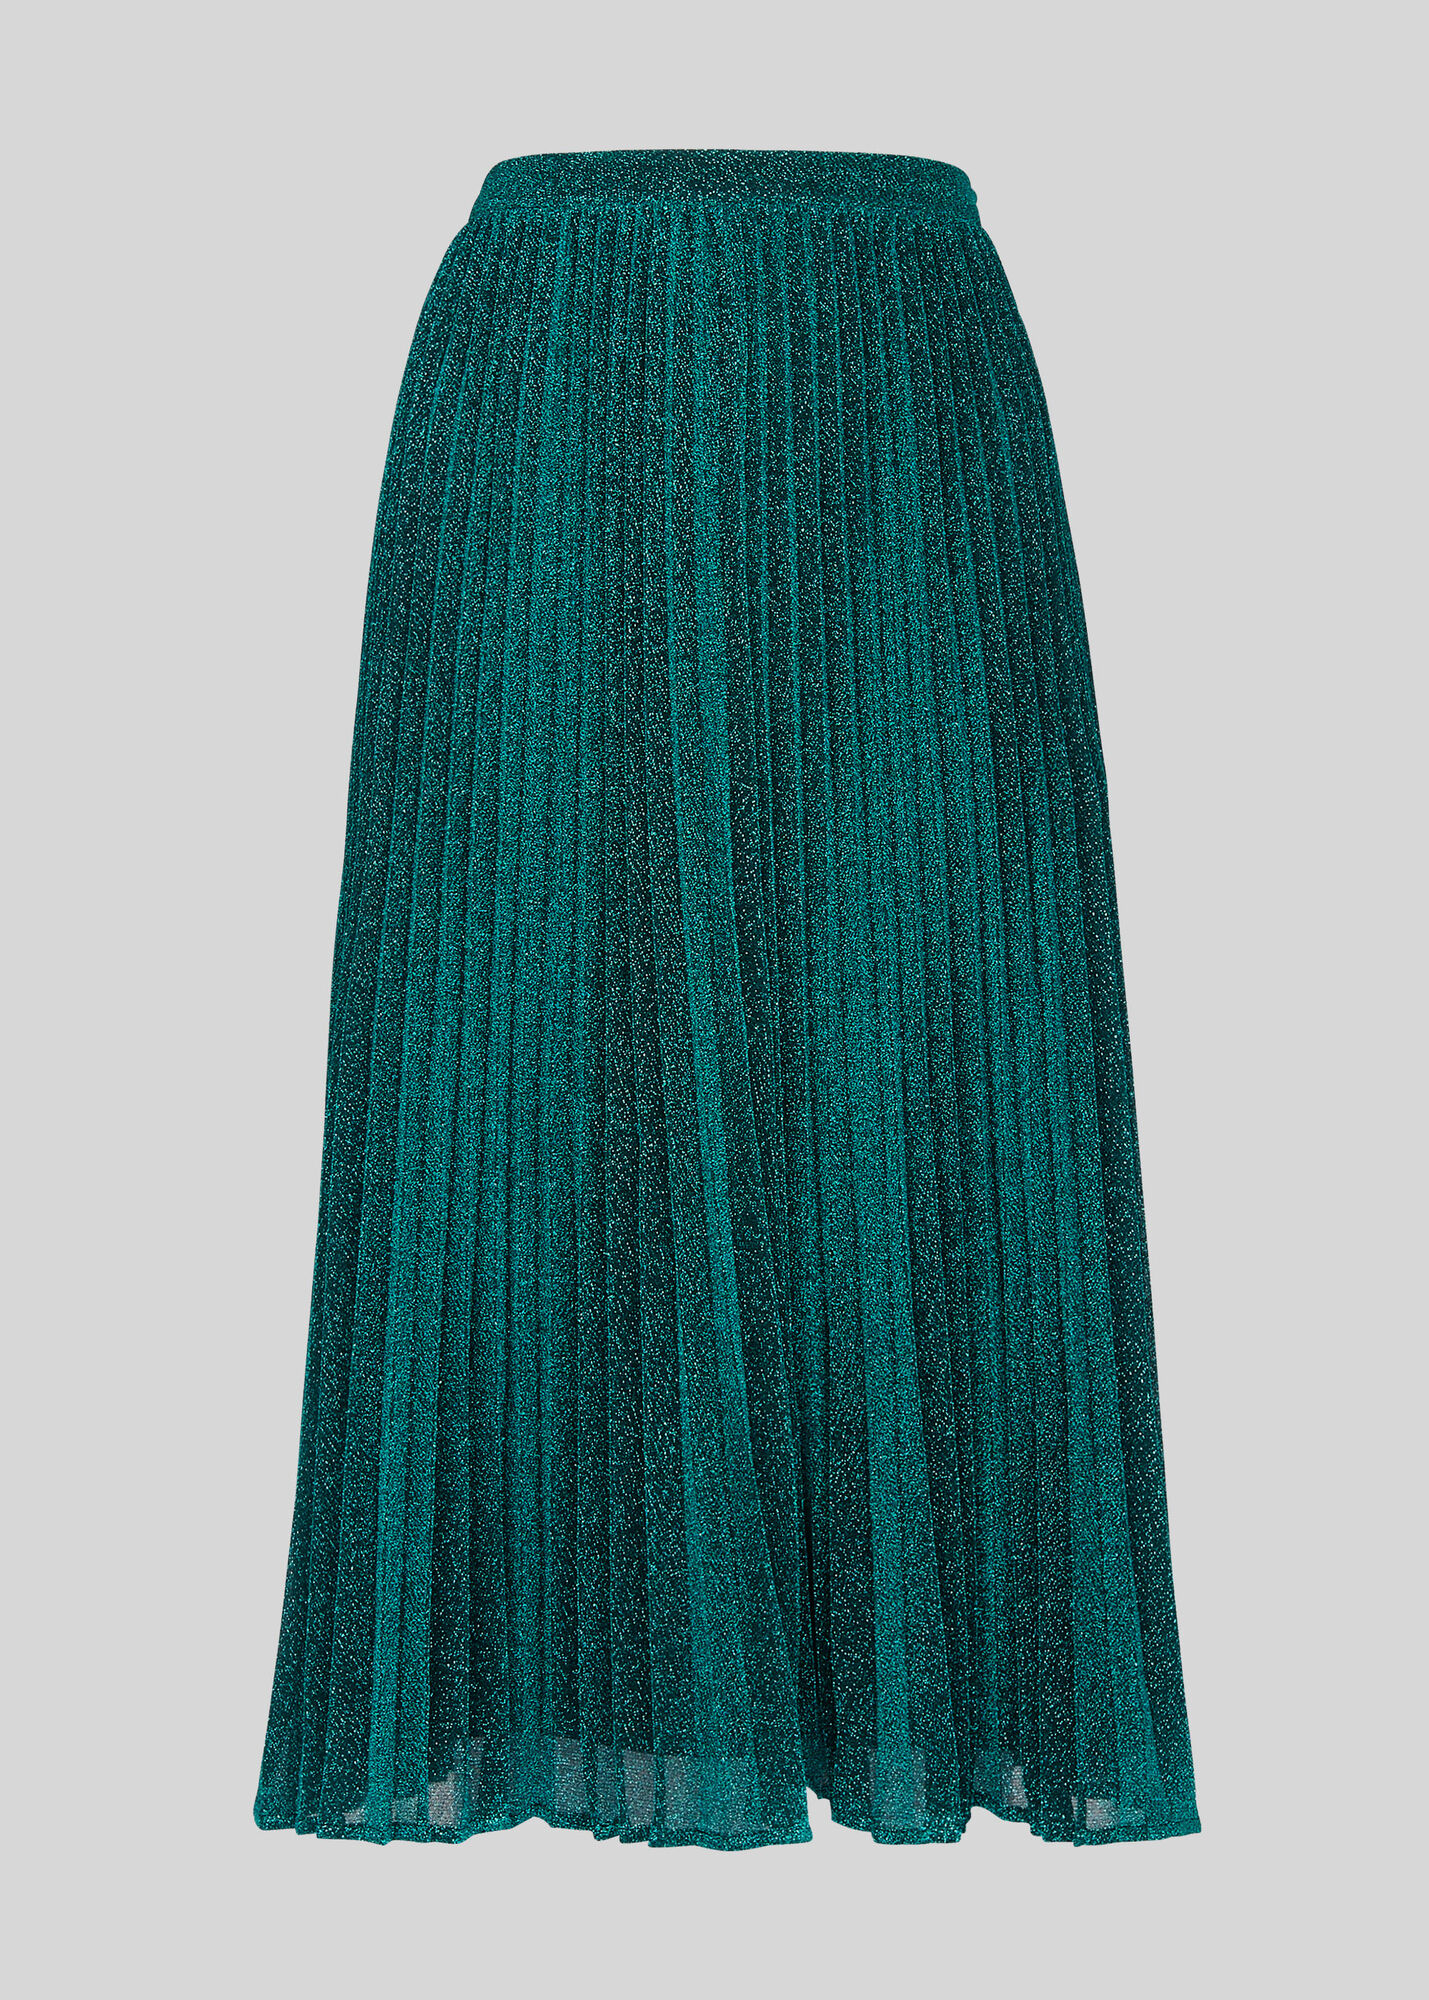 Green Sparkle Pleated Skirt | WHISTLES